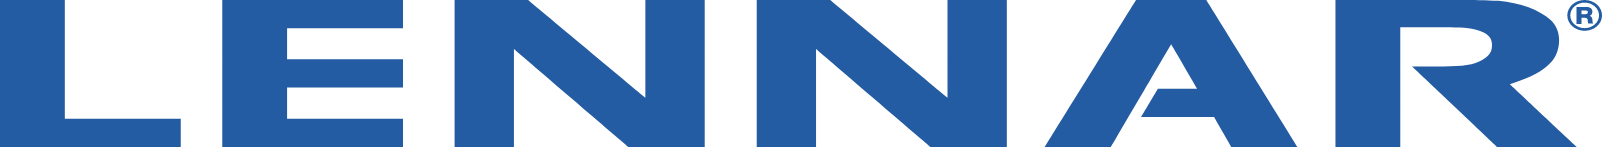 Lennar logo large (transparent PNG)